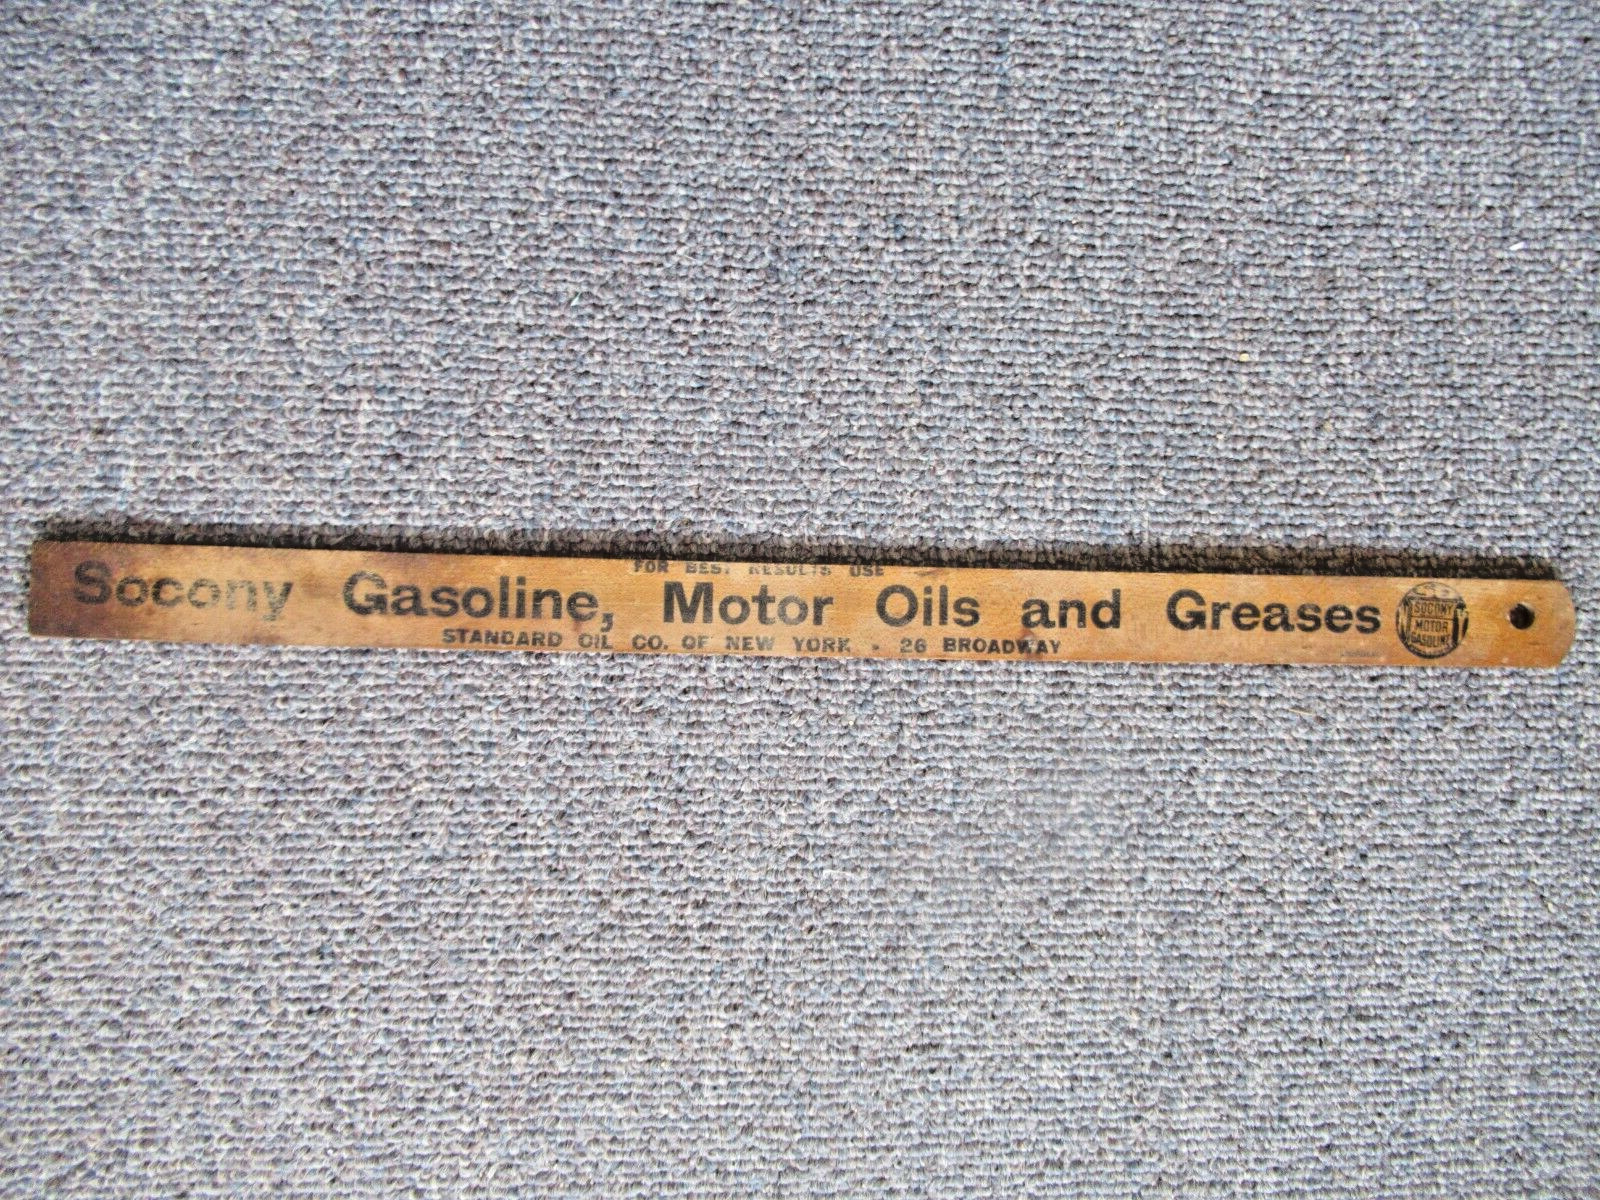 Atwater Kent gasoline gauge May 18, 1909 Socony Standard Oil NY 26 Broadway Vtg